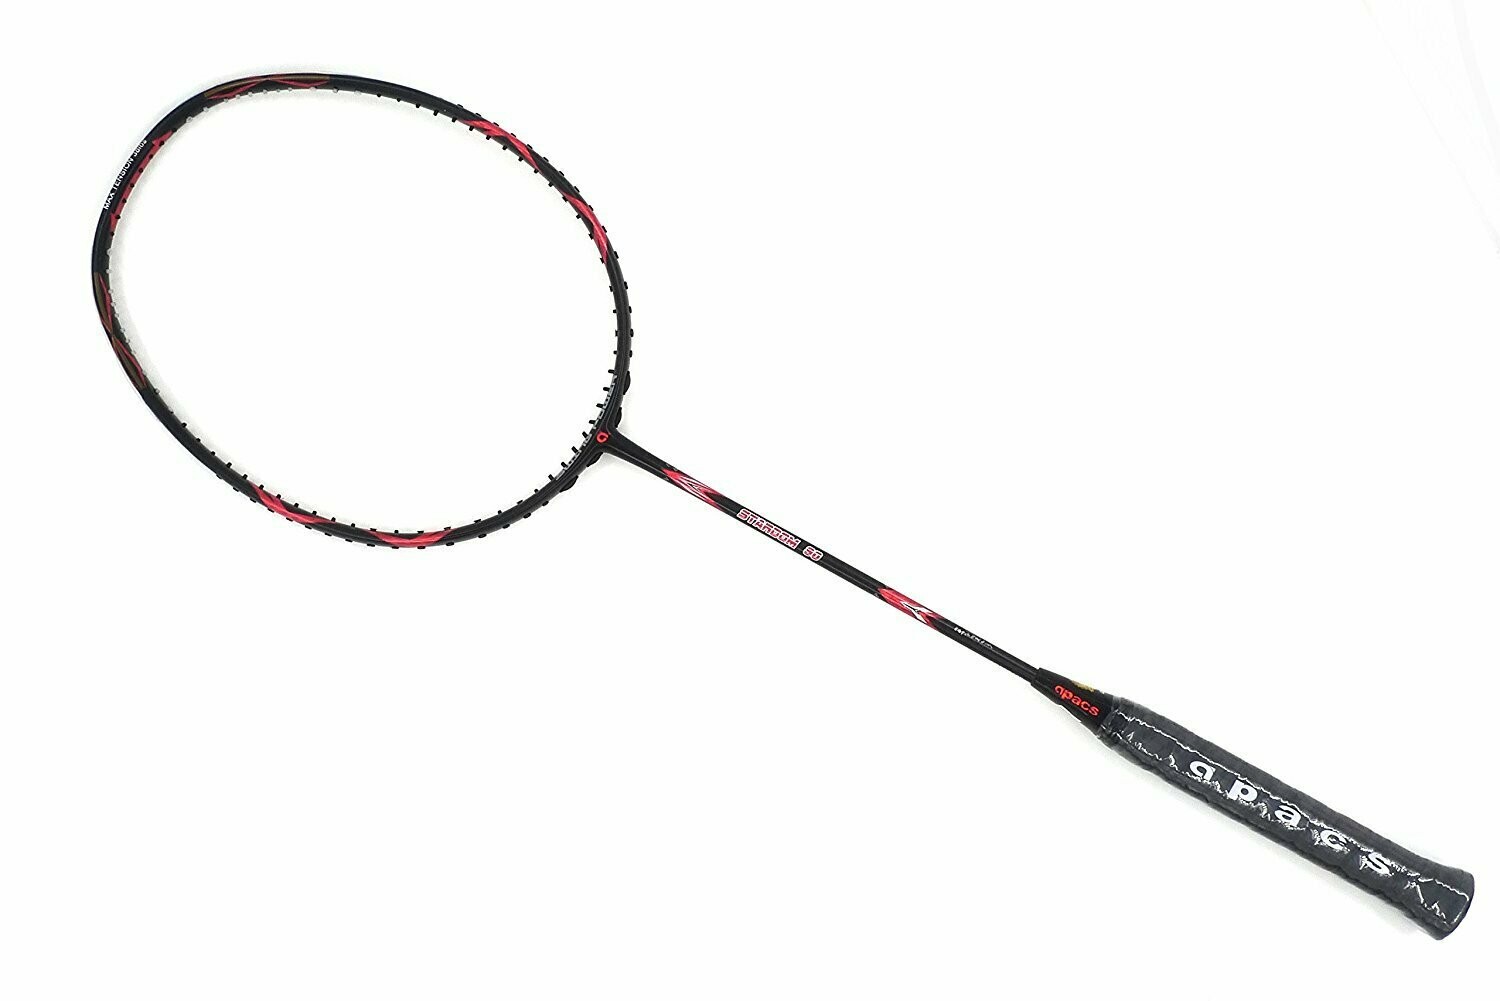 Apacs Stardom 90 Badminton Racquet